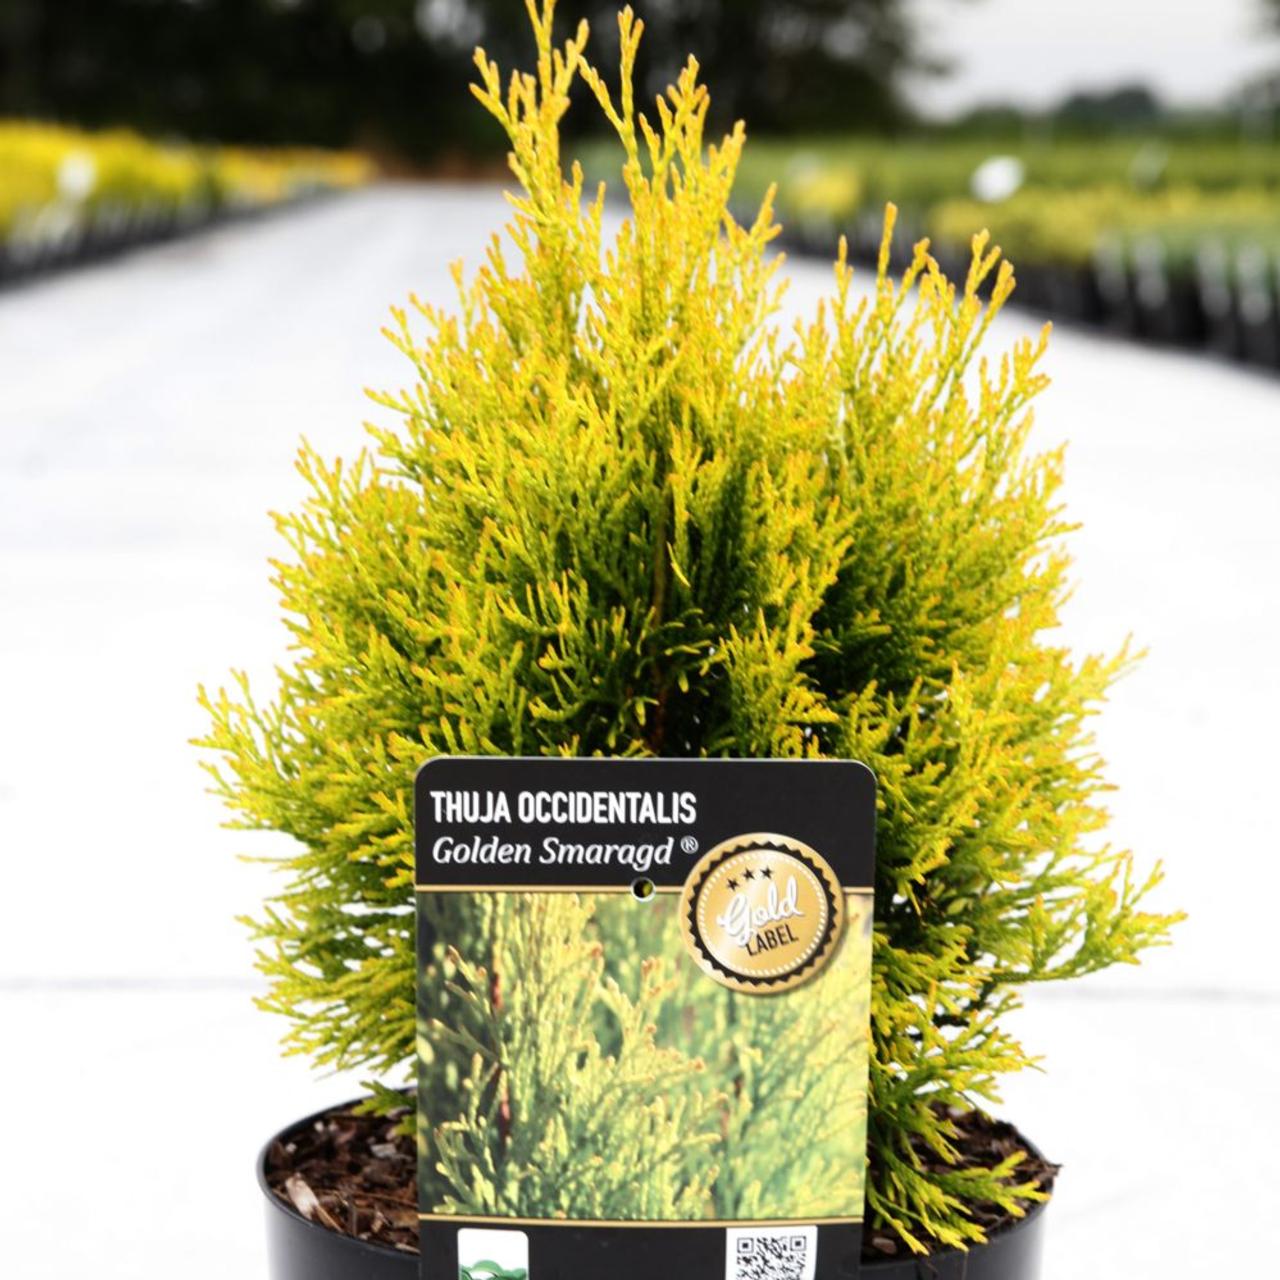 Thuja occidentalis 'Golden Smaragd' plant